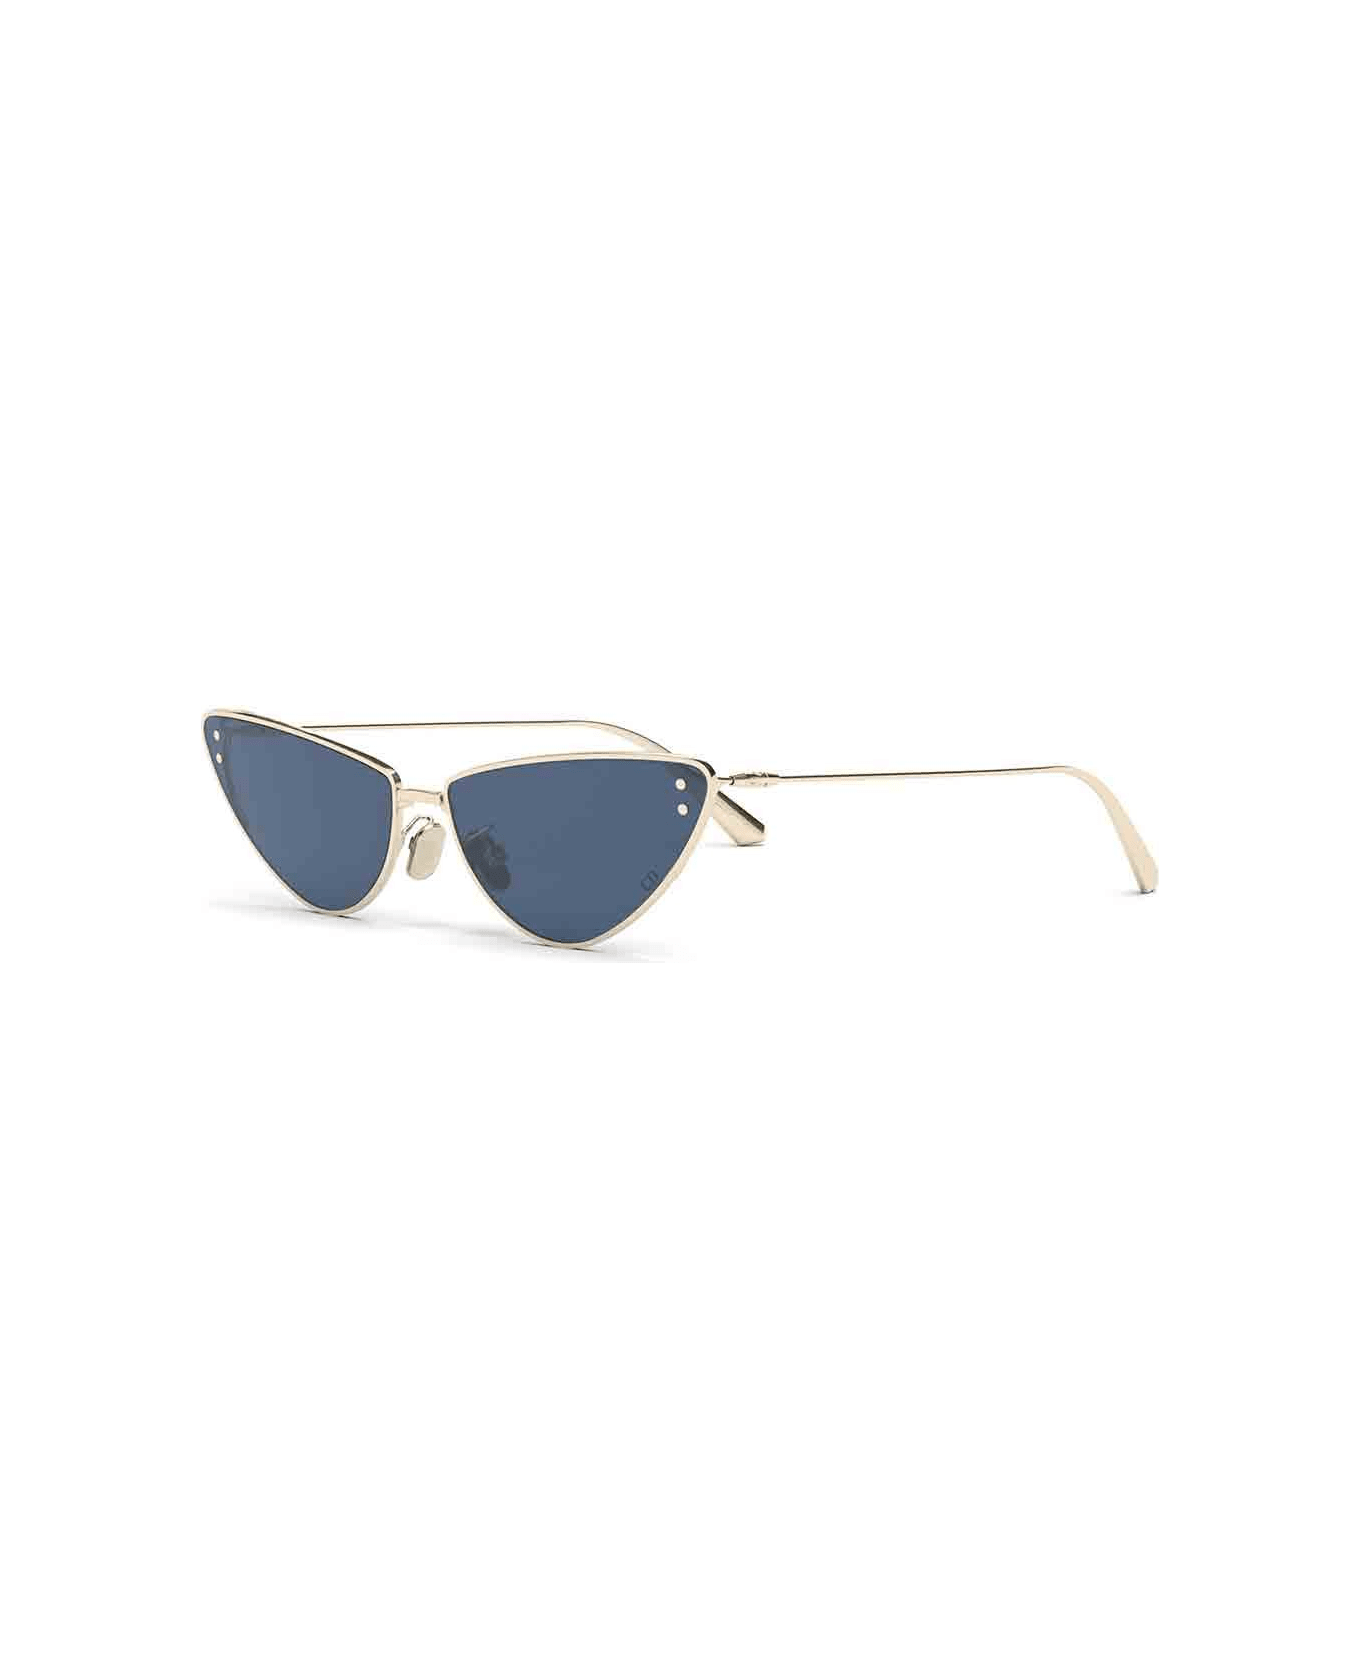 Dior Eyewear Sunglasses - Oro/Blu